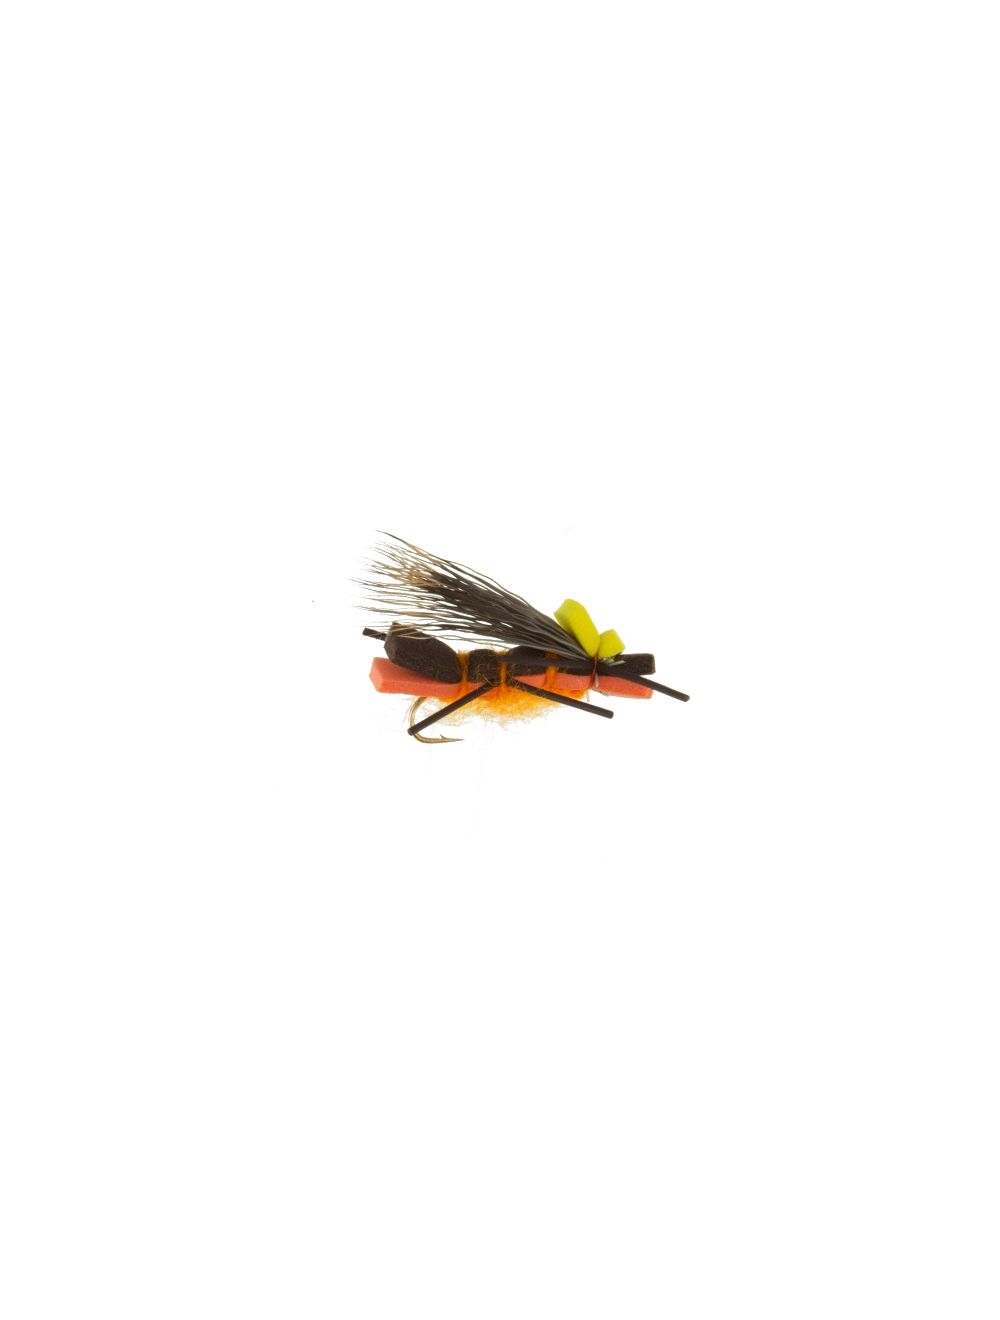 https://eadn-wc02-1020161.nxedge.io/cdn/media/catalog/product/cache/32b930e20bfef0c9badd7ee253a86131/g/o/godzilla-fly-fishing-flies-dry-flies_1.jpg